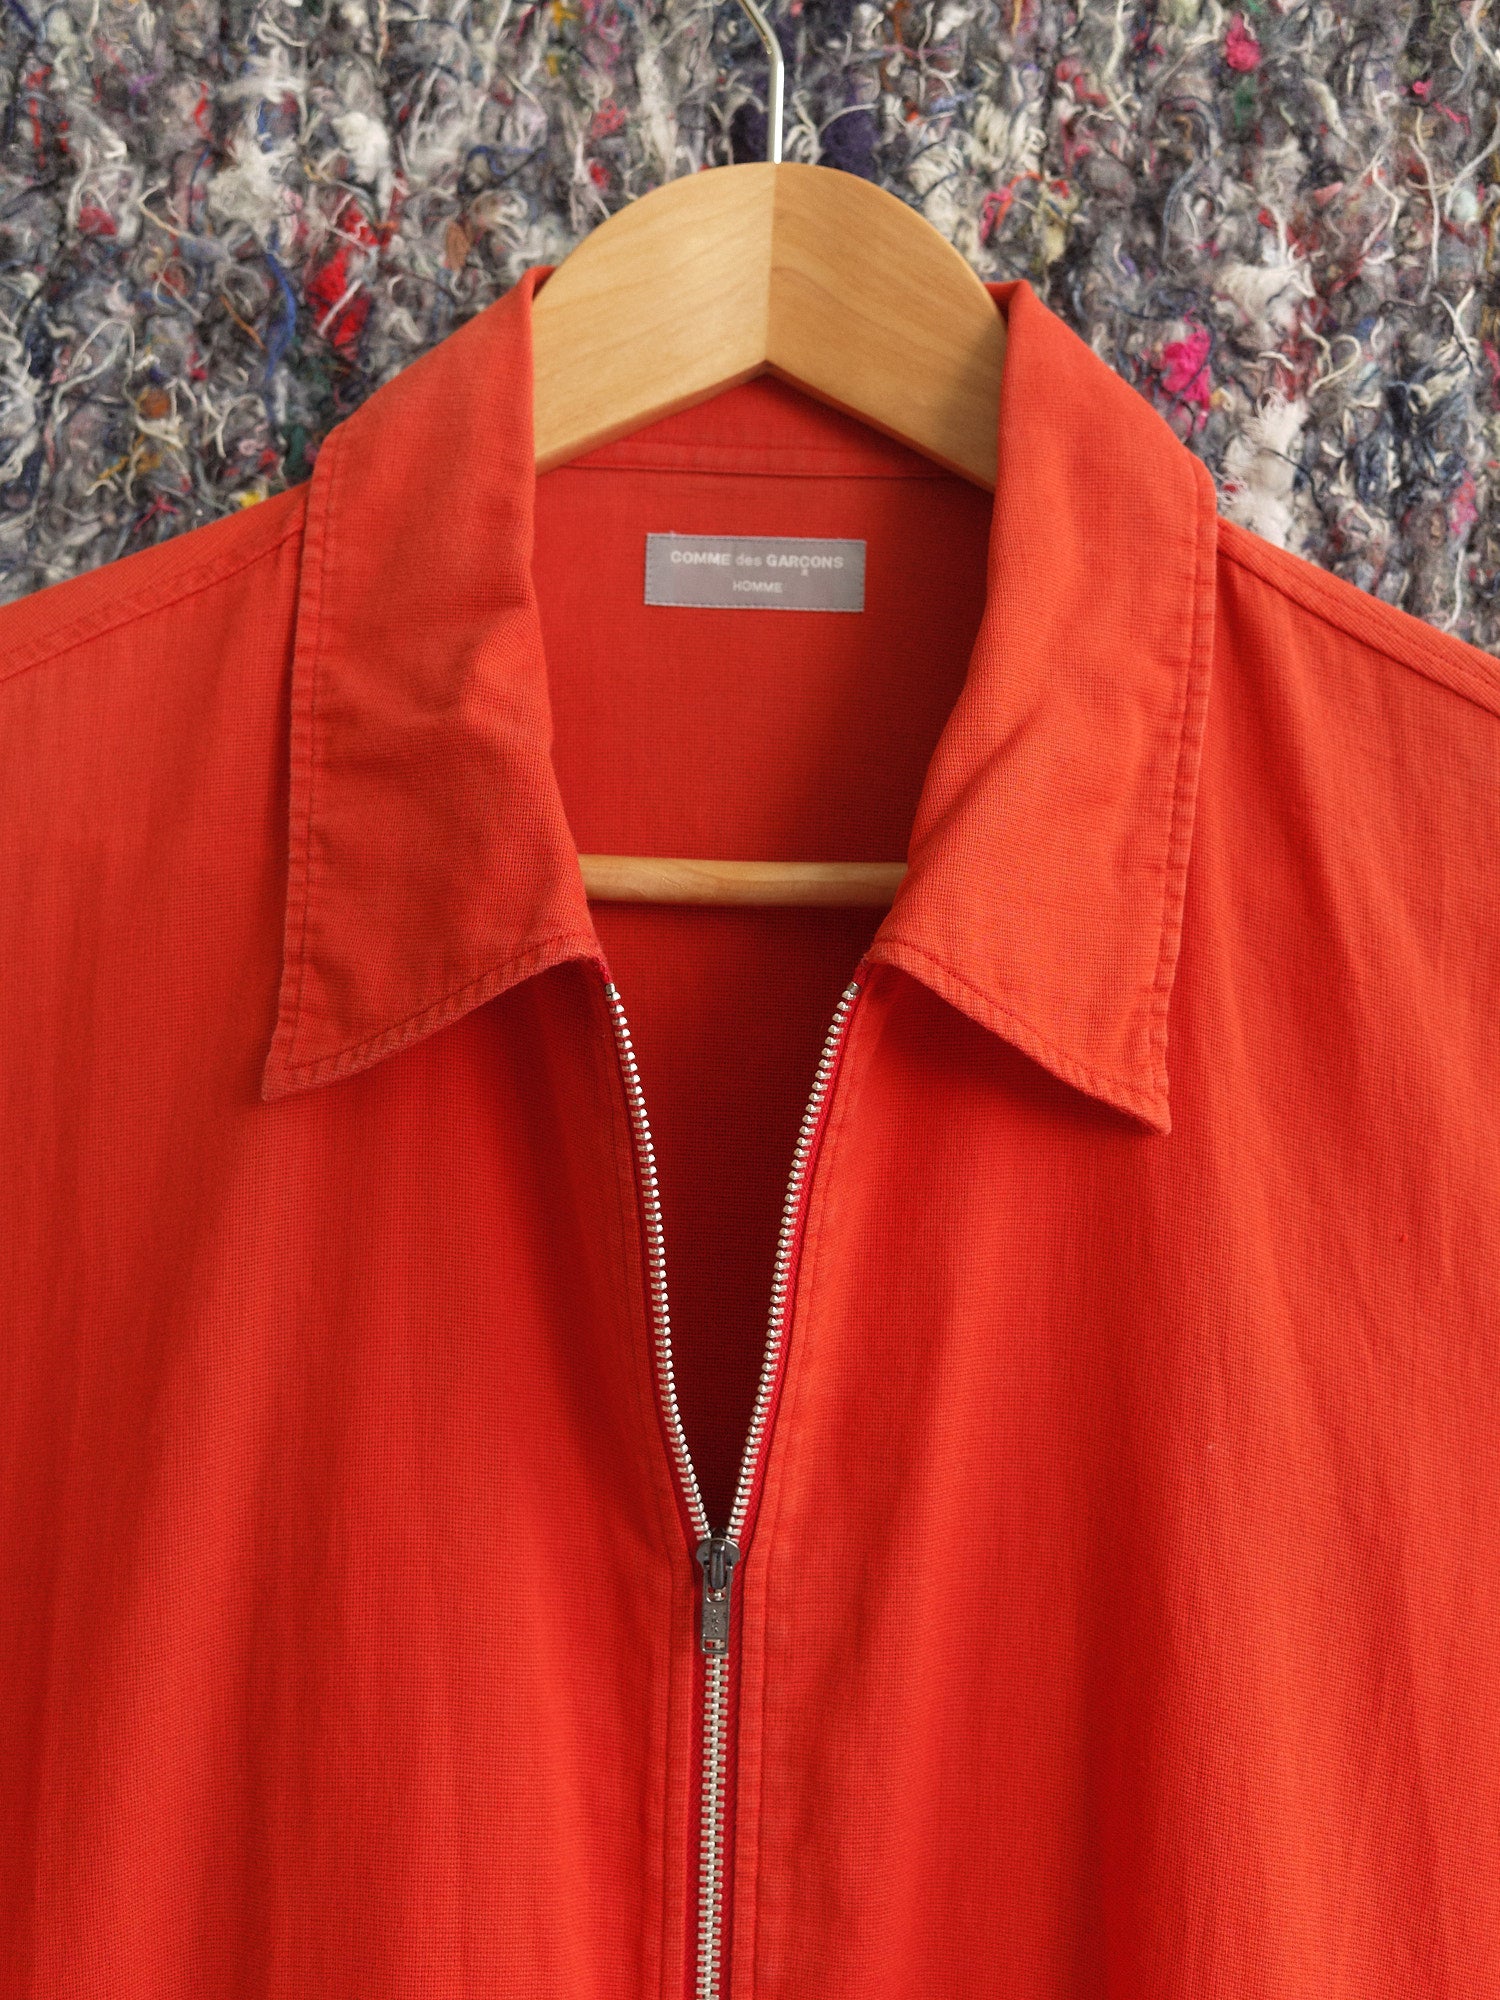 Comme des Garcons Homme 1997 red cotton drawstring hem zip jacket - approx M